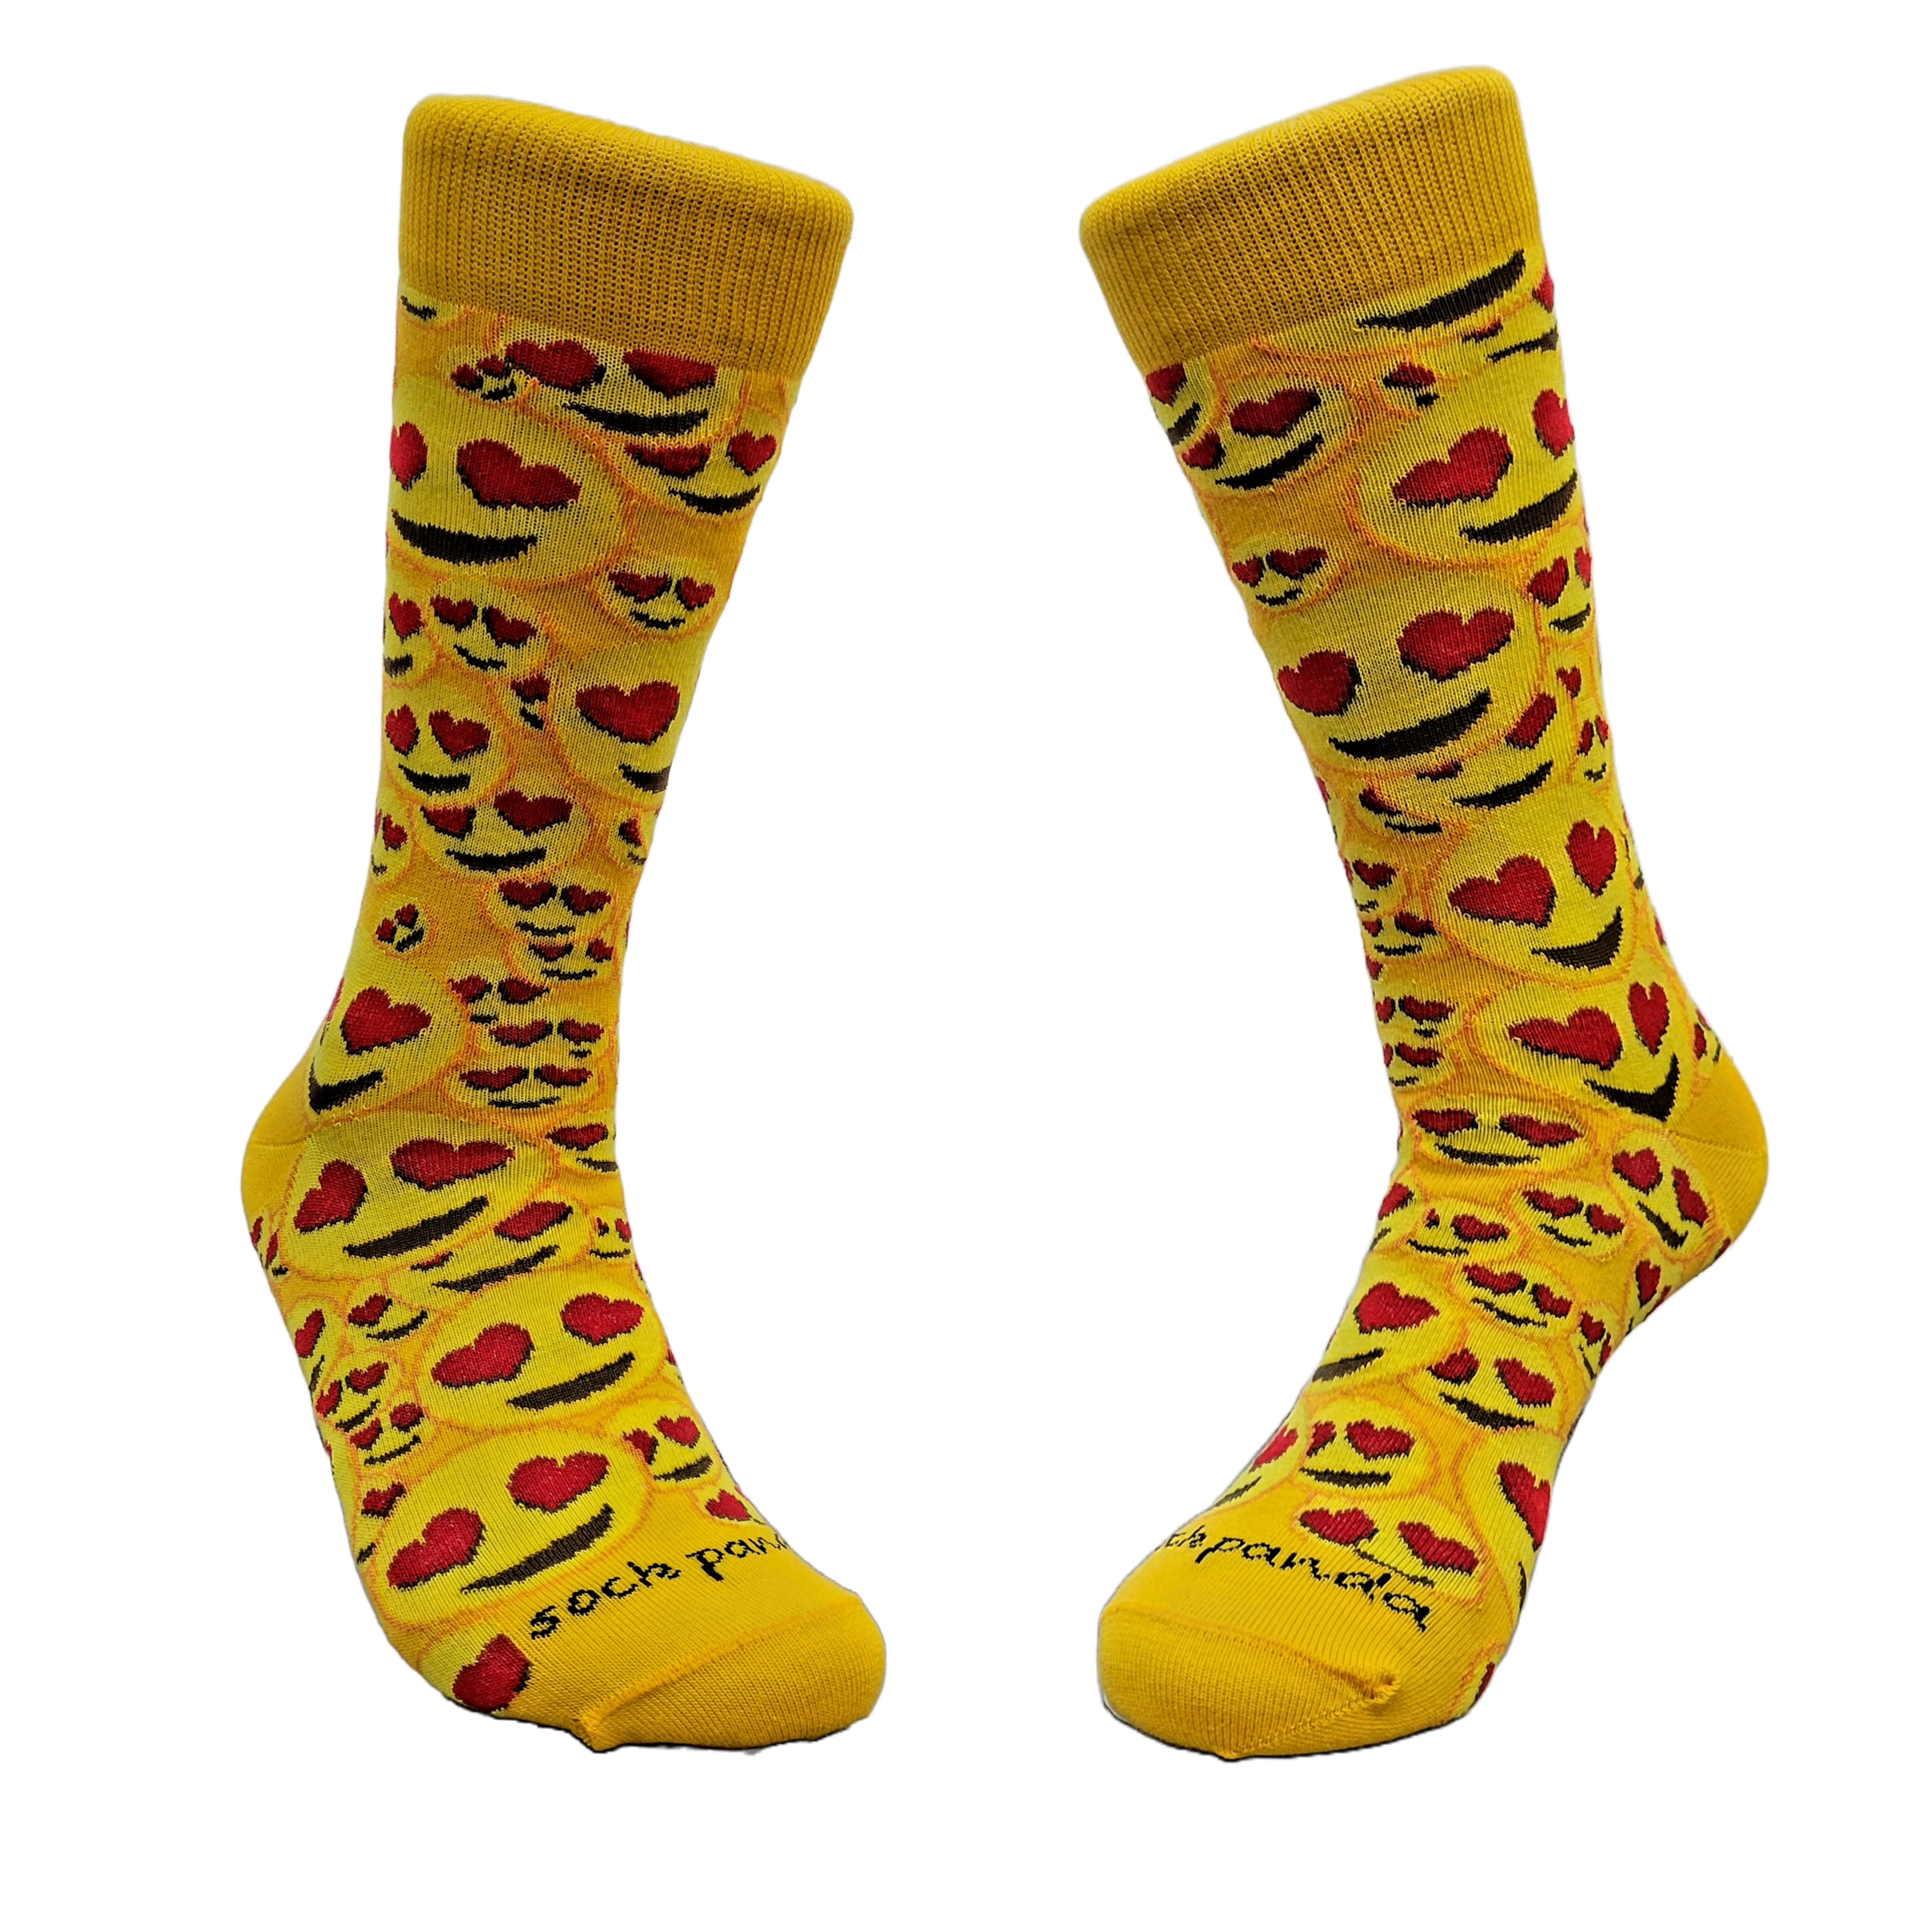 Love Eye Emoji Patterned Socks from the Sock Panda (Adult Medium)